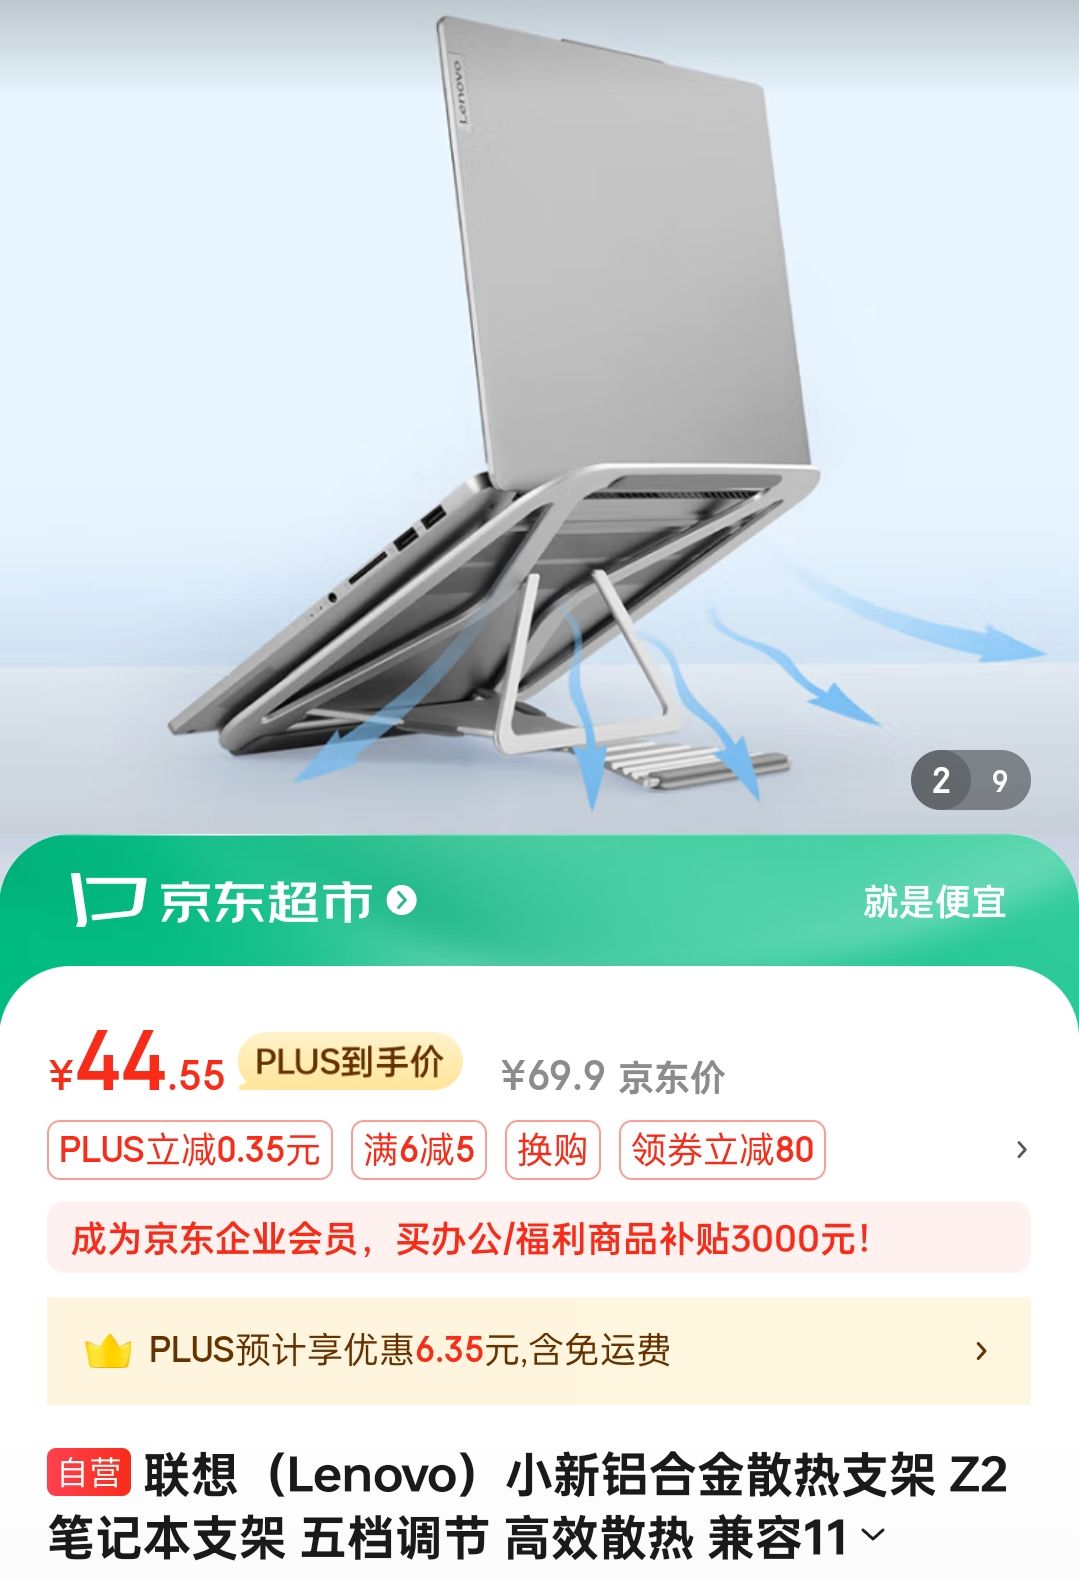 Lenovo 联想 小新铝合金散热支架 Z2 笔记本支架 五档调节 高效散热 兼容11-16英寸设备笔记本平板通用 44.55元